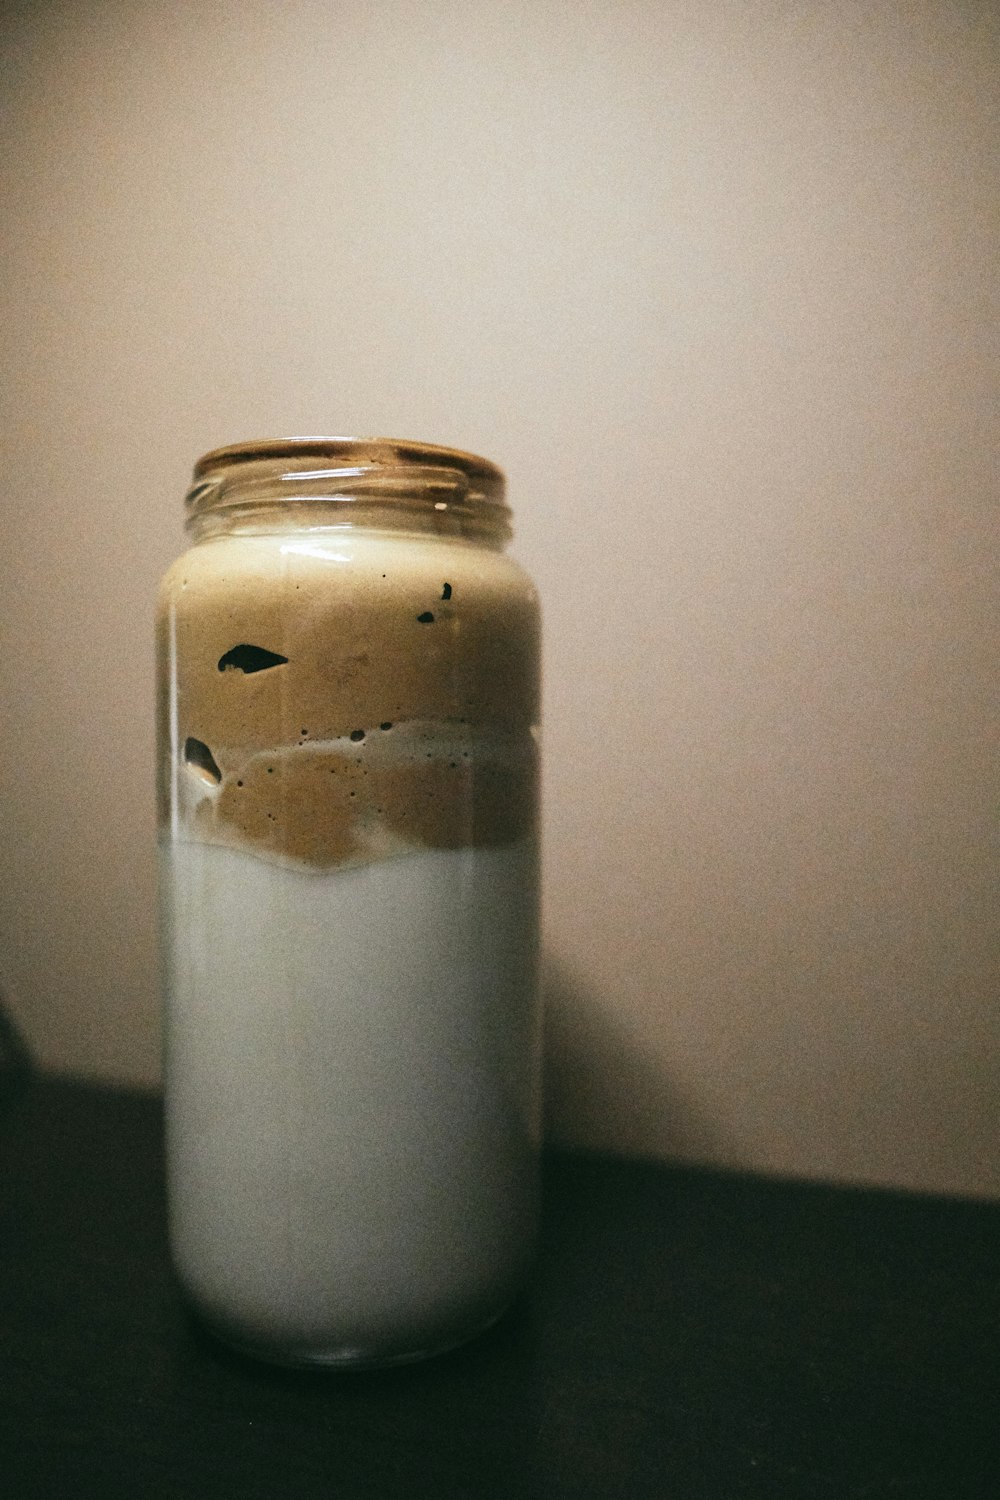 white powder in clear glass jar